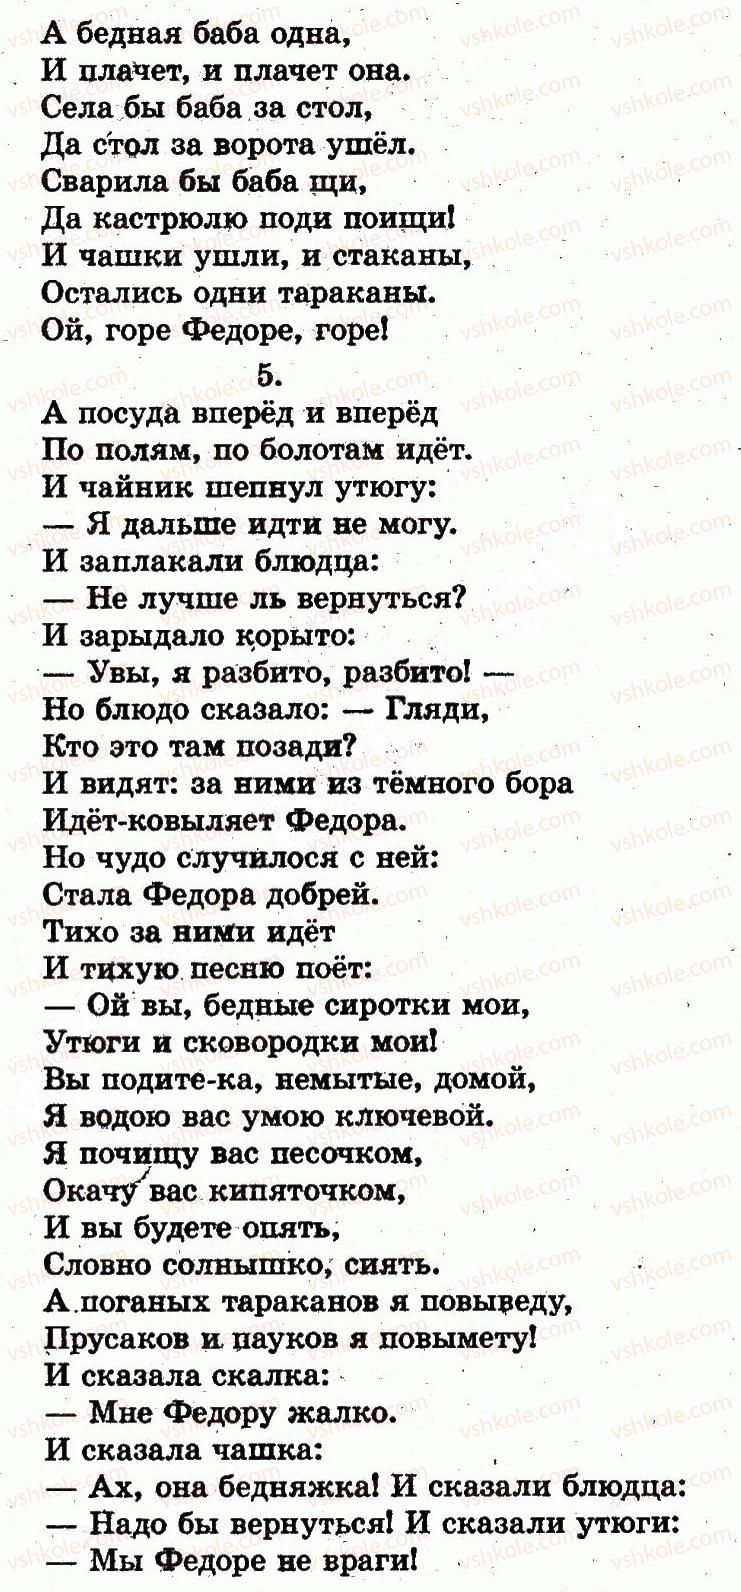 1-russkij-yazyk-in-lapshina-nn-zorka-2012--ovoschi-frukty-страница124-rnd4499.jpg